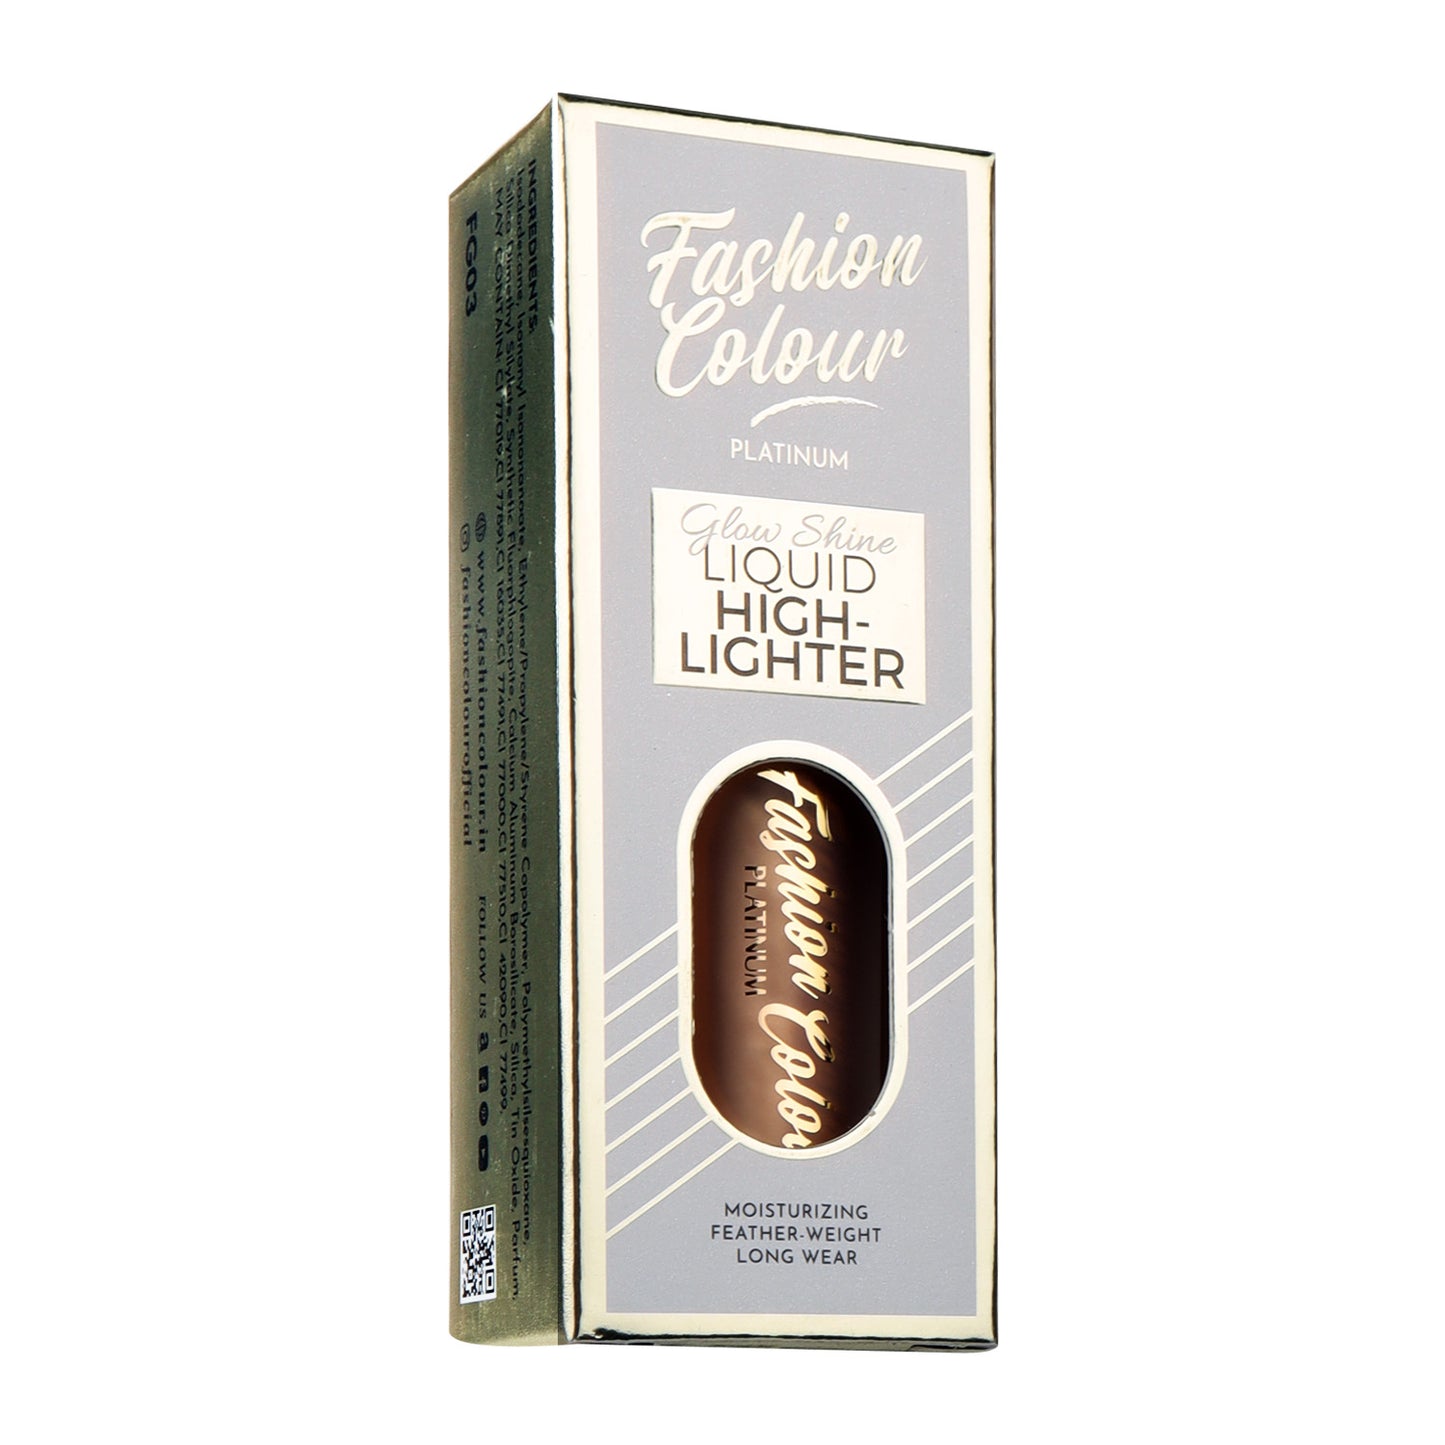 Fashion Colour Platinum Glow Shine Liquid Highlighter, 5gm